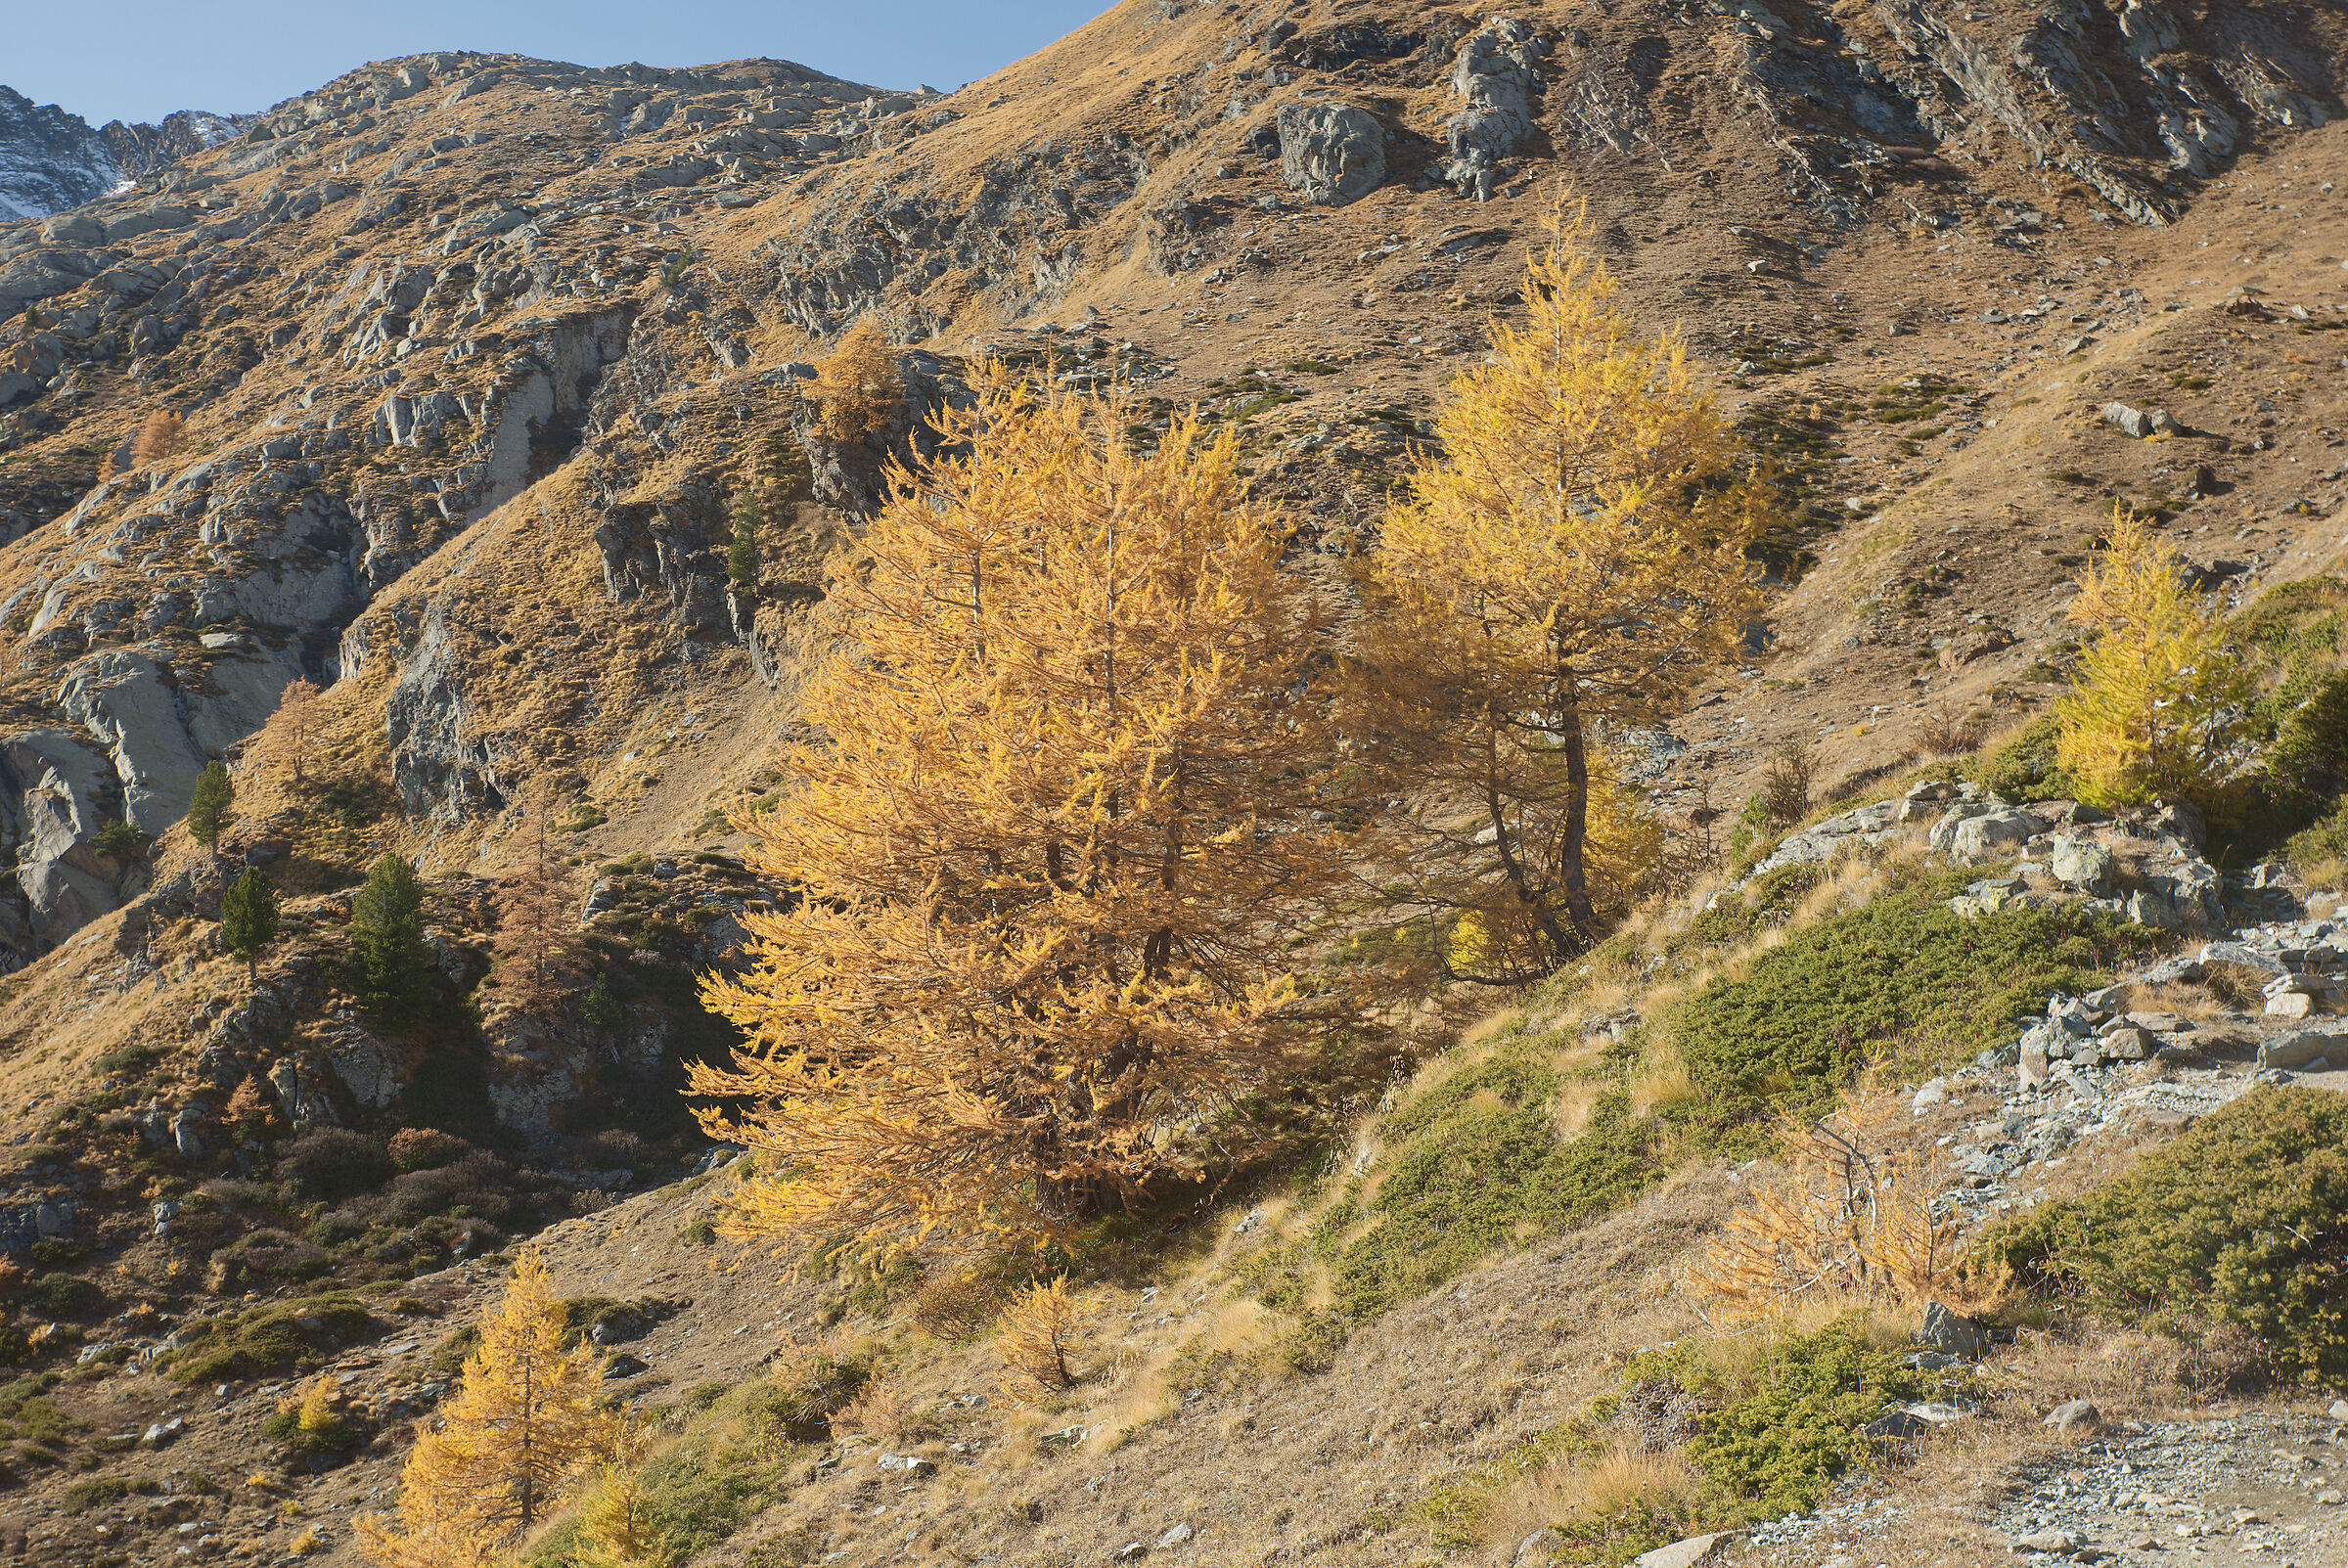 autumn in Val d'Aosta October 2021...